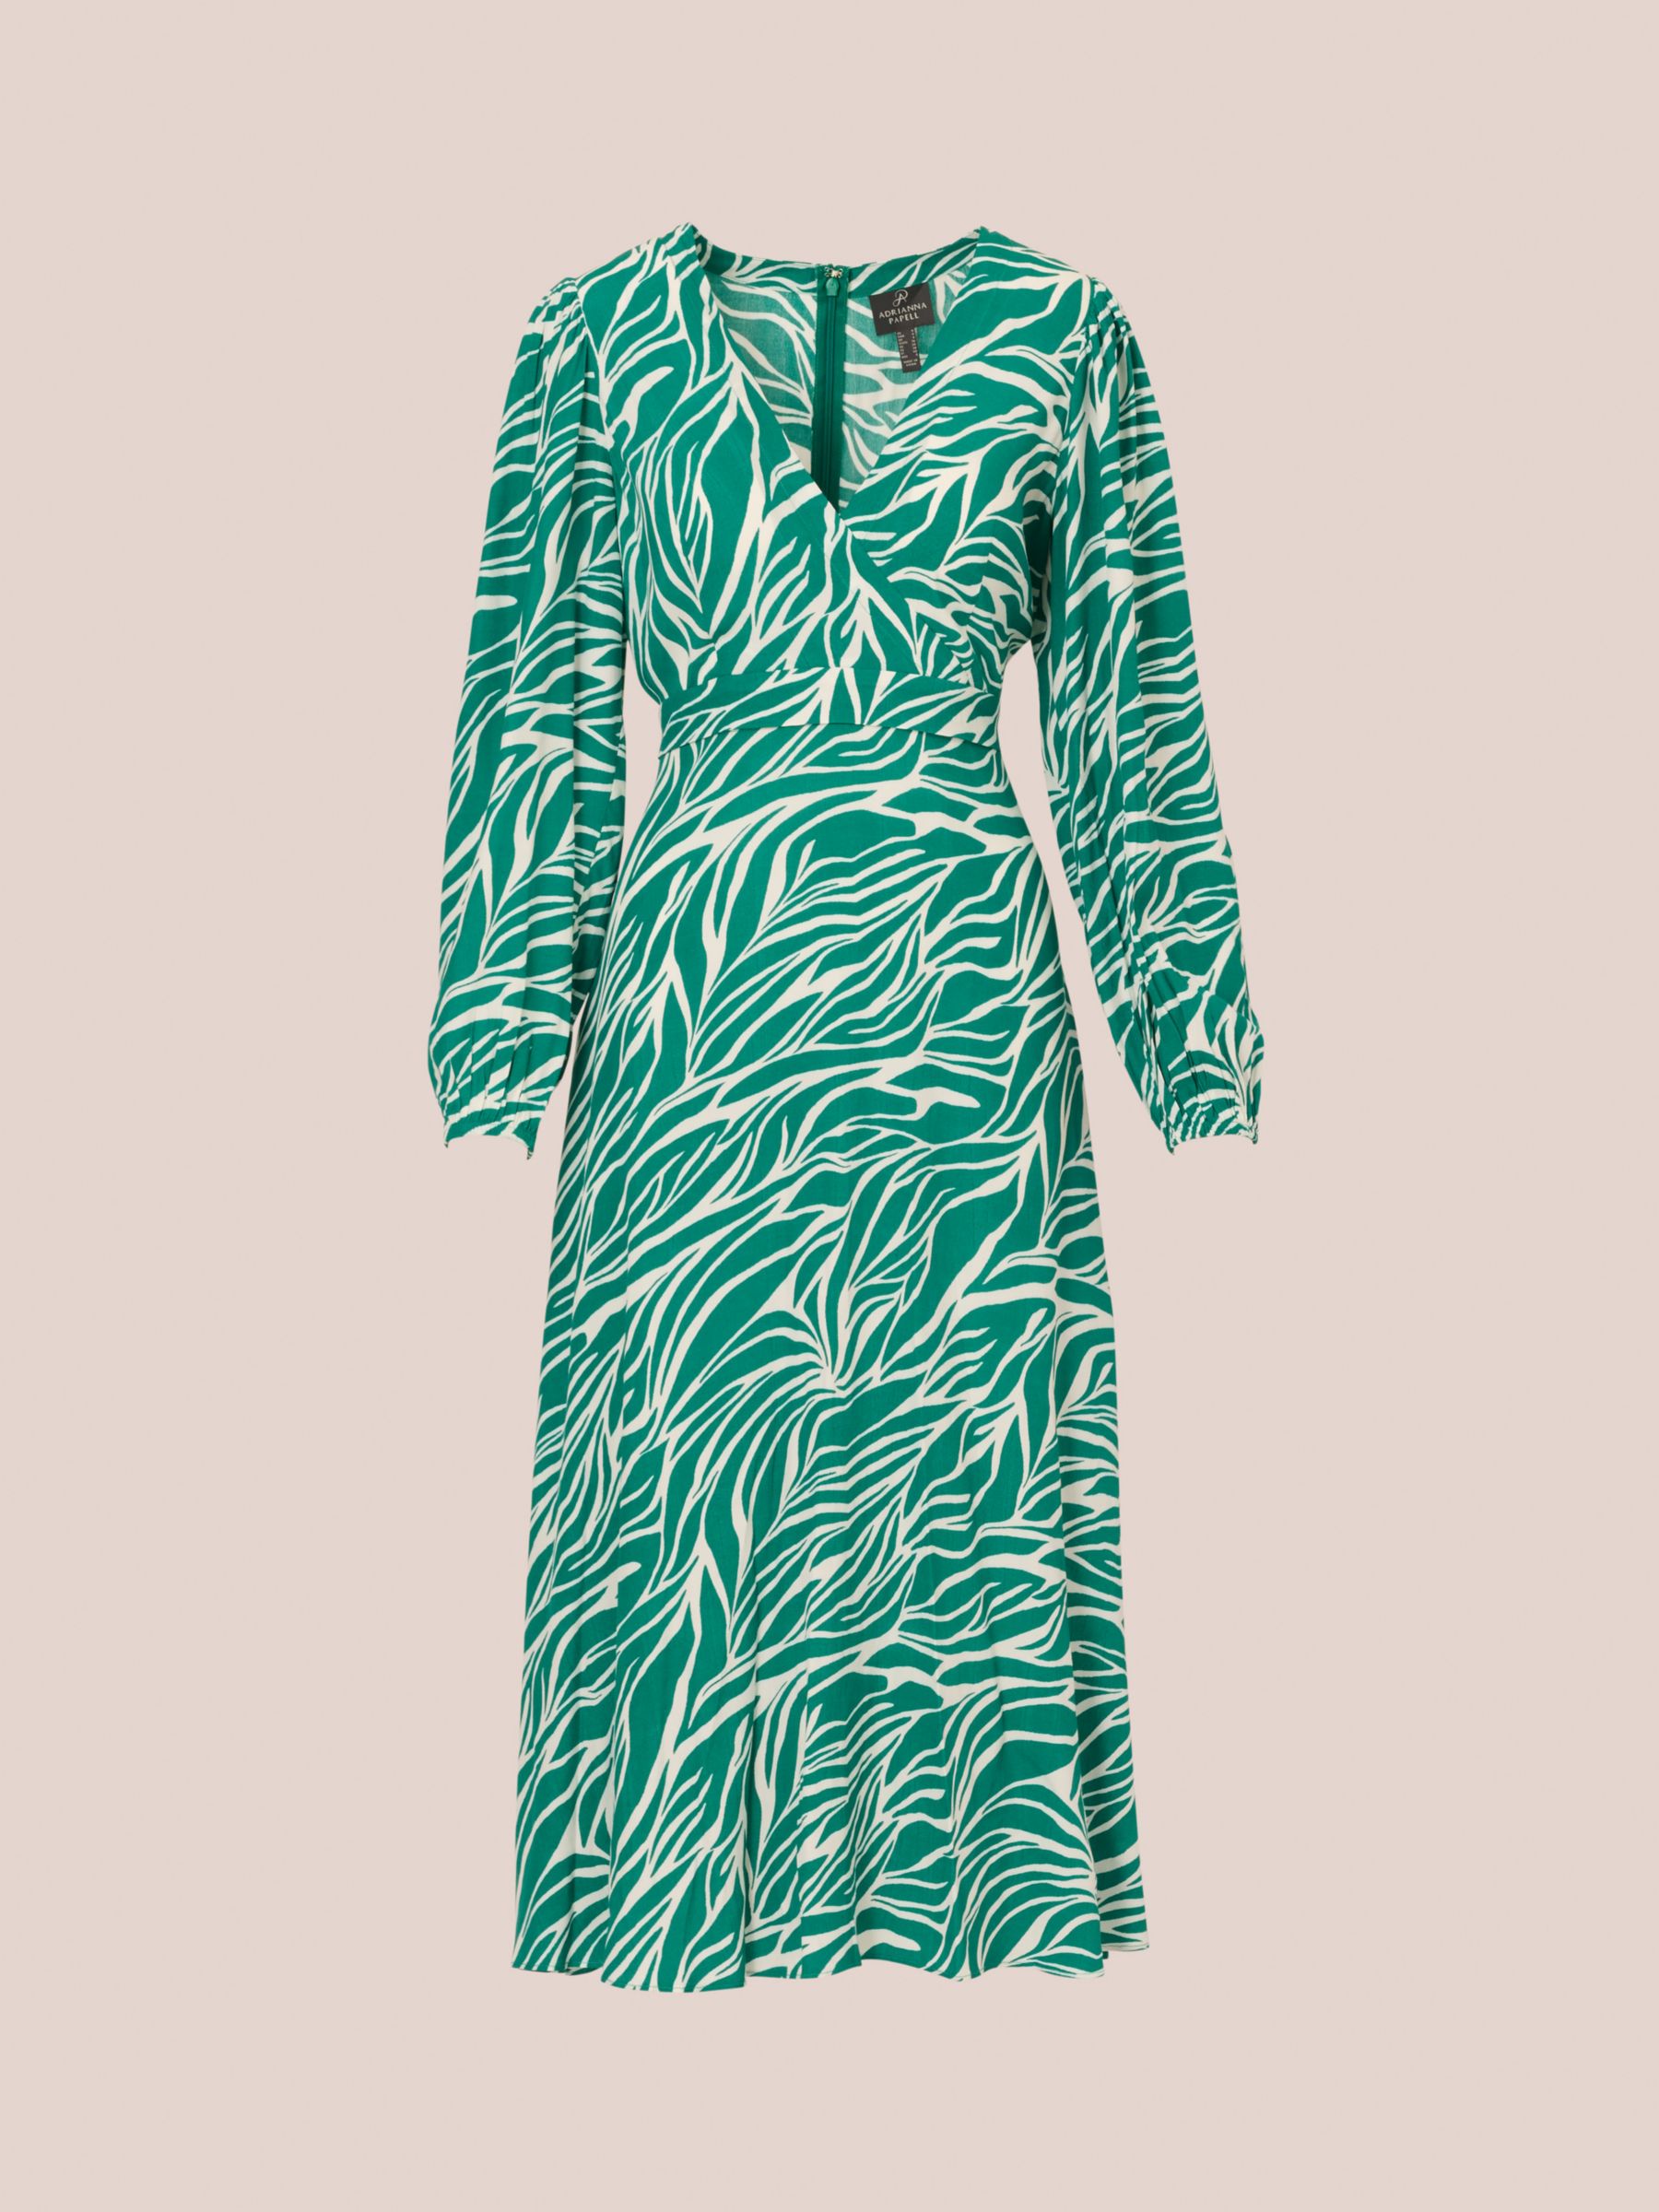 Adrianna Papell Printed Midi Dress, Green/Ivory, 10